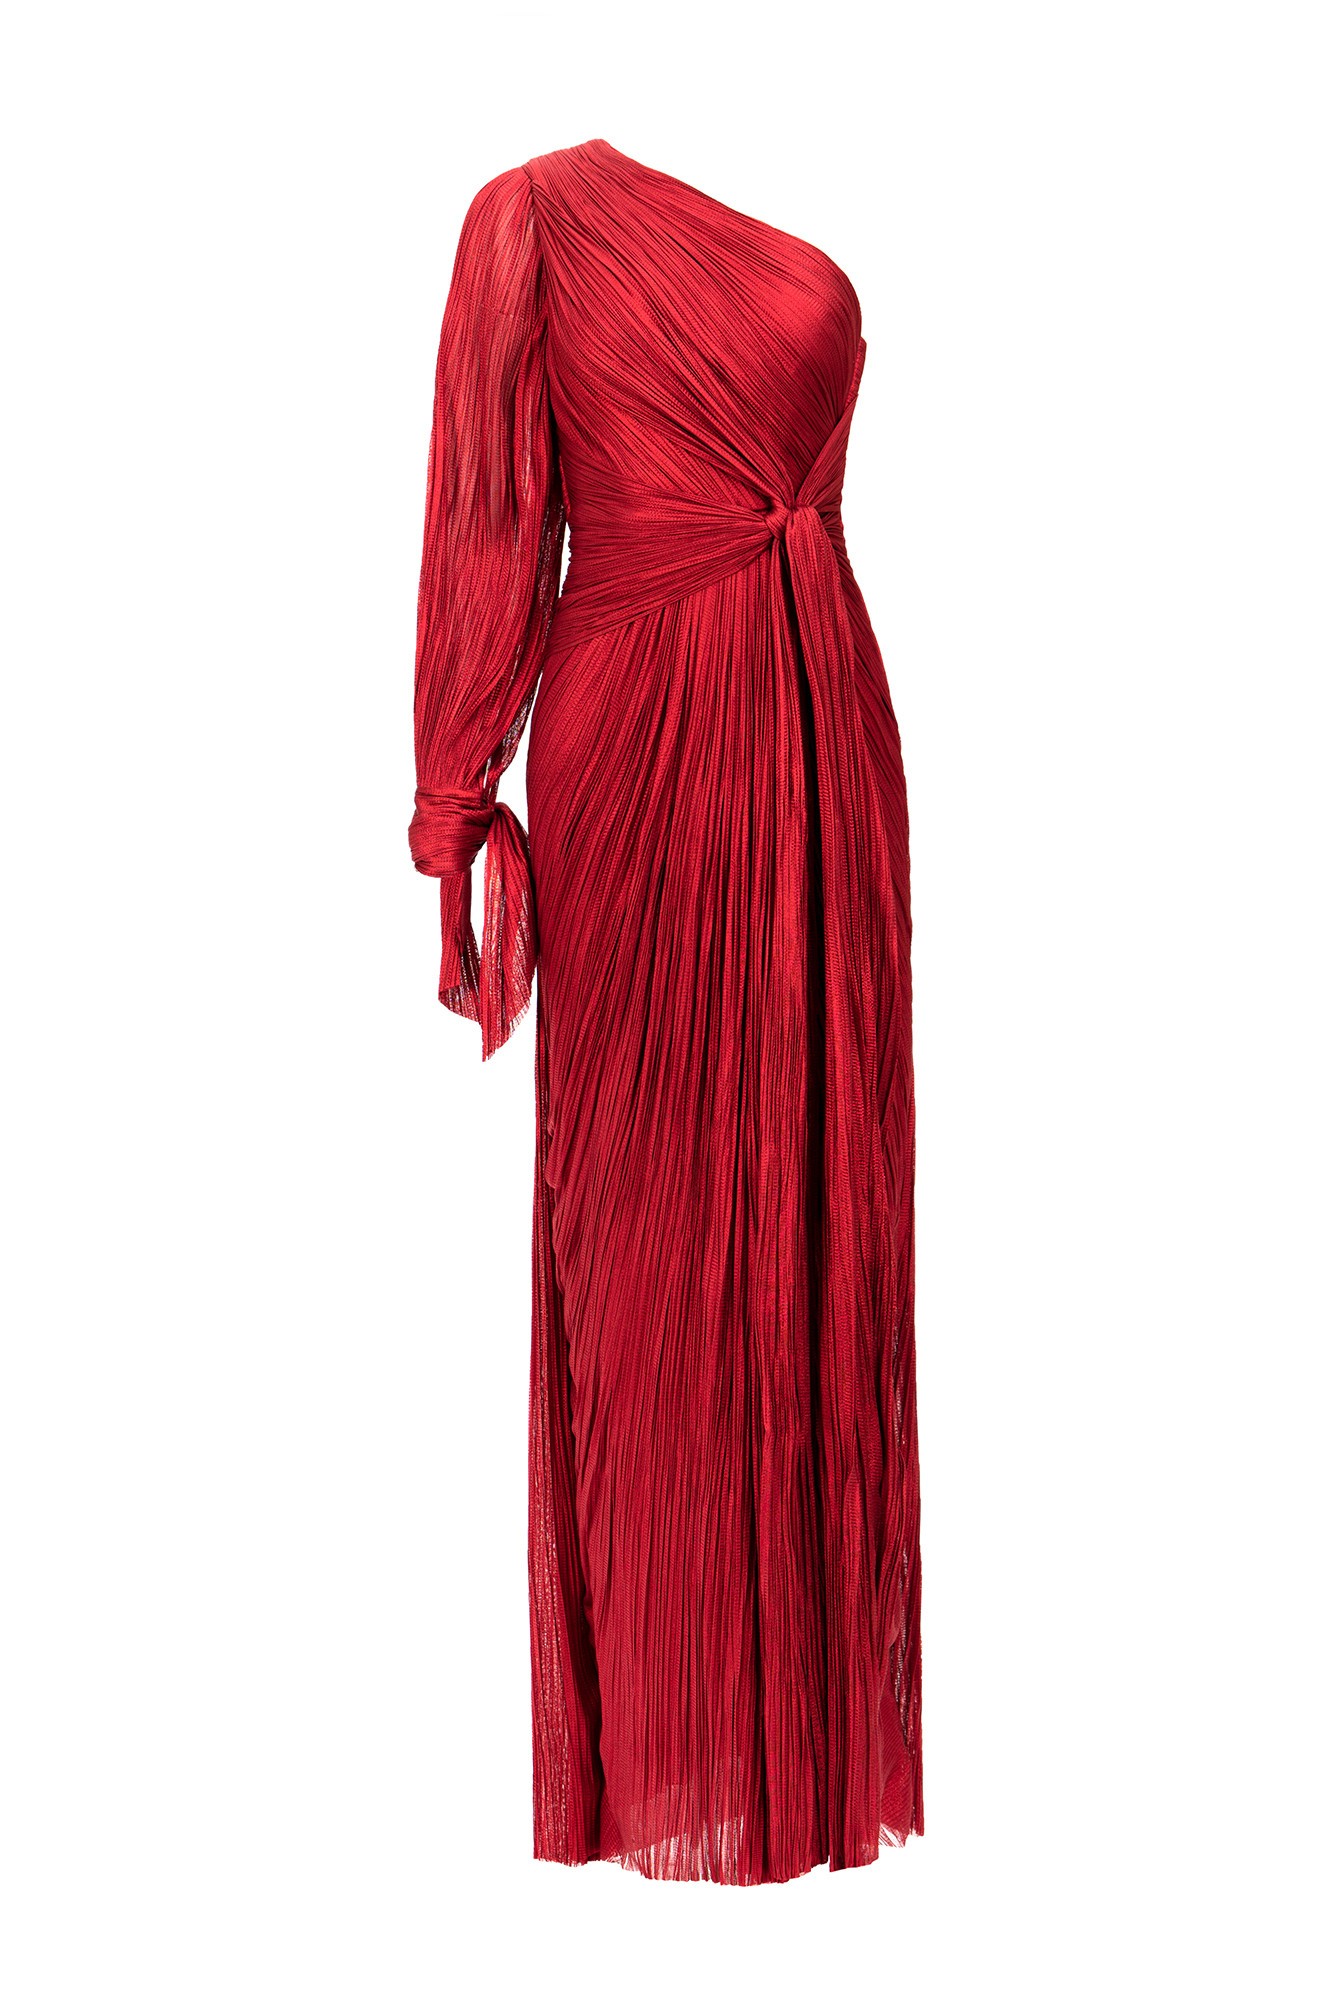 Maria Lucia Hohan Eden Red - Woman Dress - Spring Summer 2022